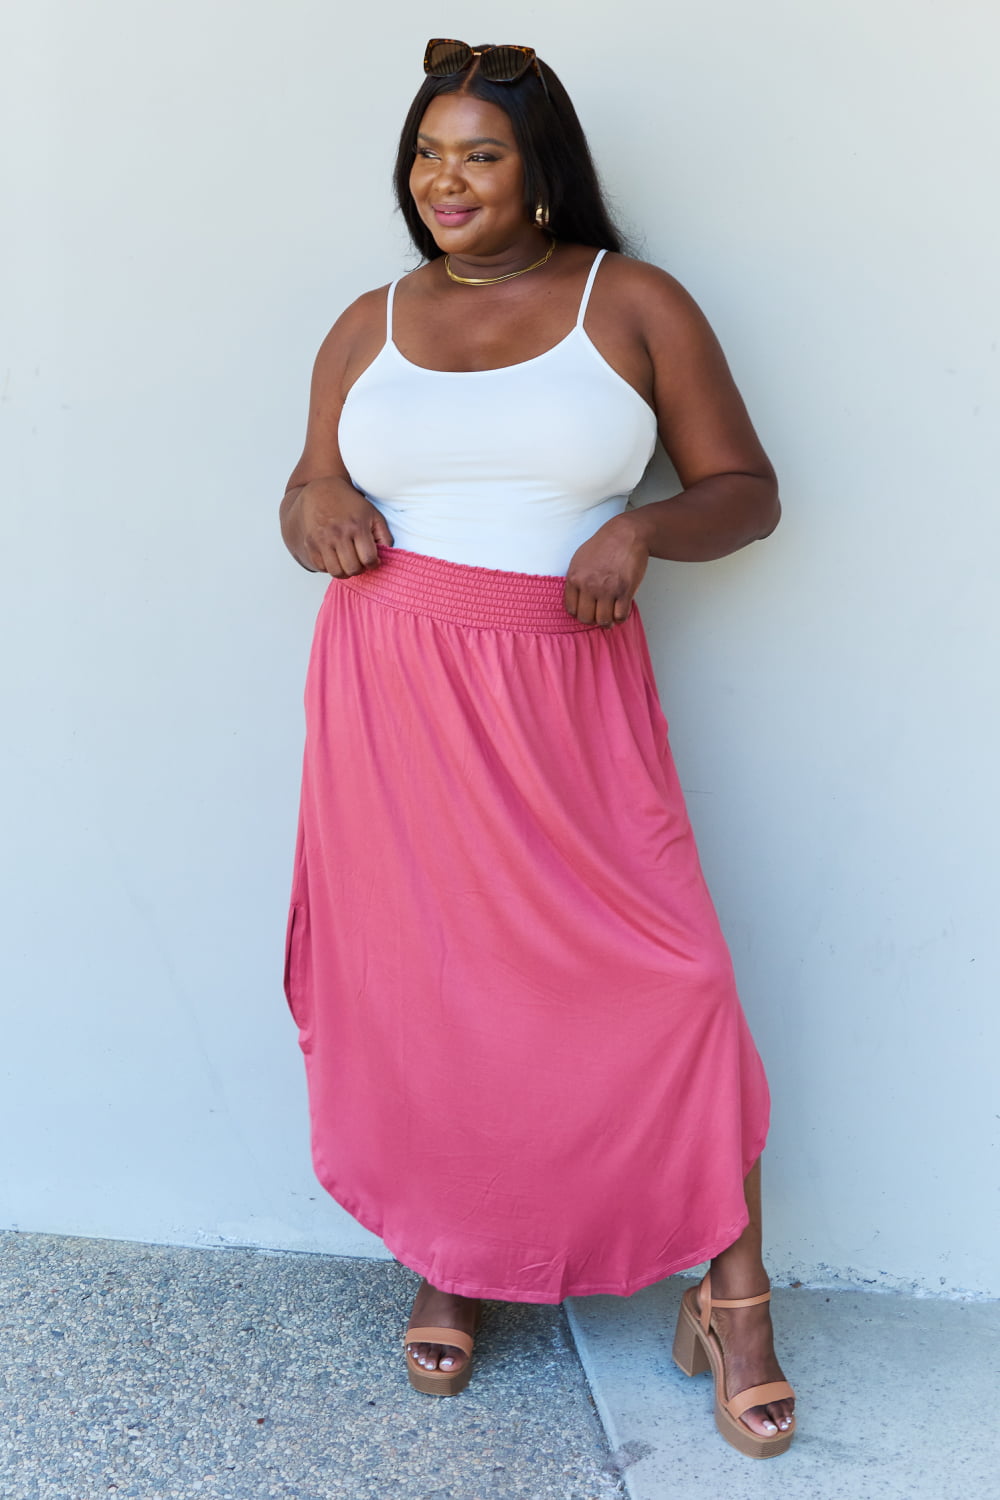 Doublju Comfort Princess High Waist Scoop Hem Maxi Skirt in Hot Pink - Online Only